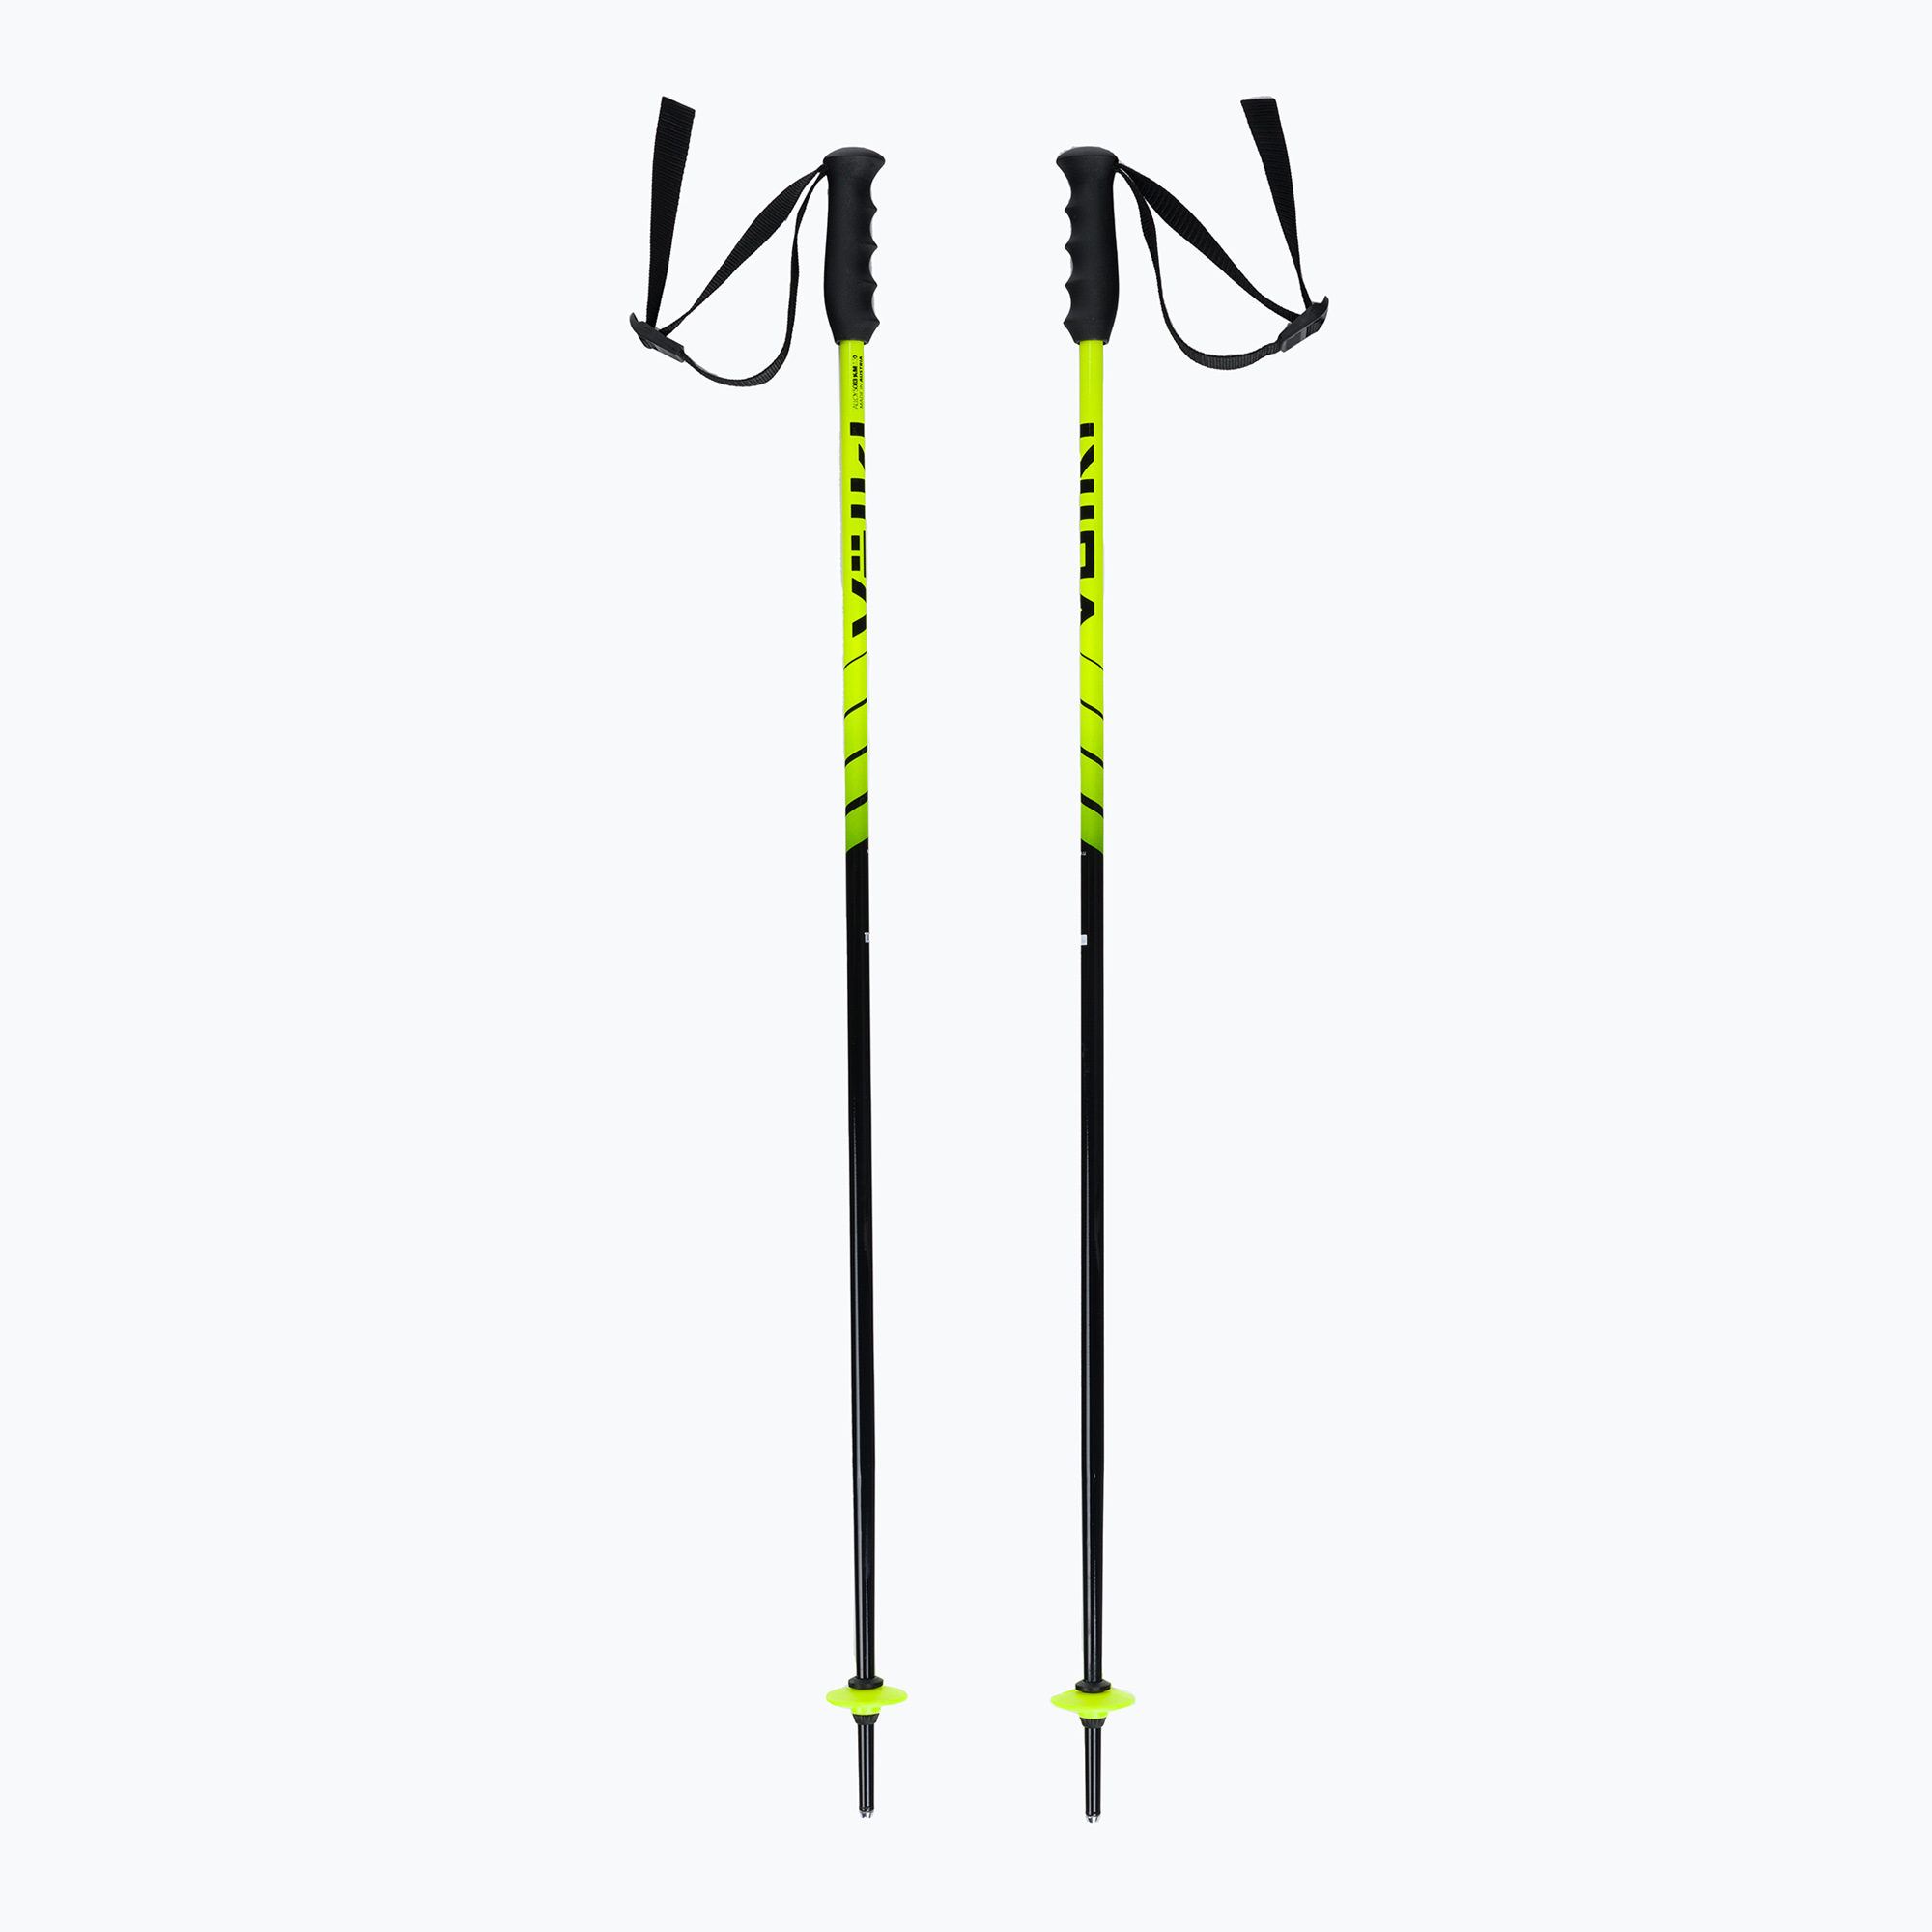 Bețe de schi pentru copii Völkl Speedstick JR galben și negru 141020